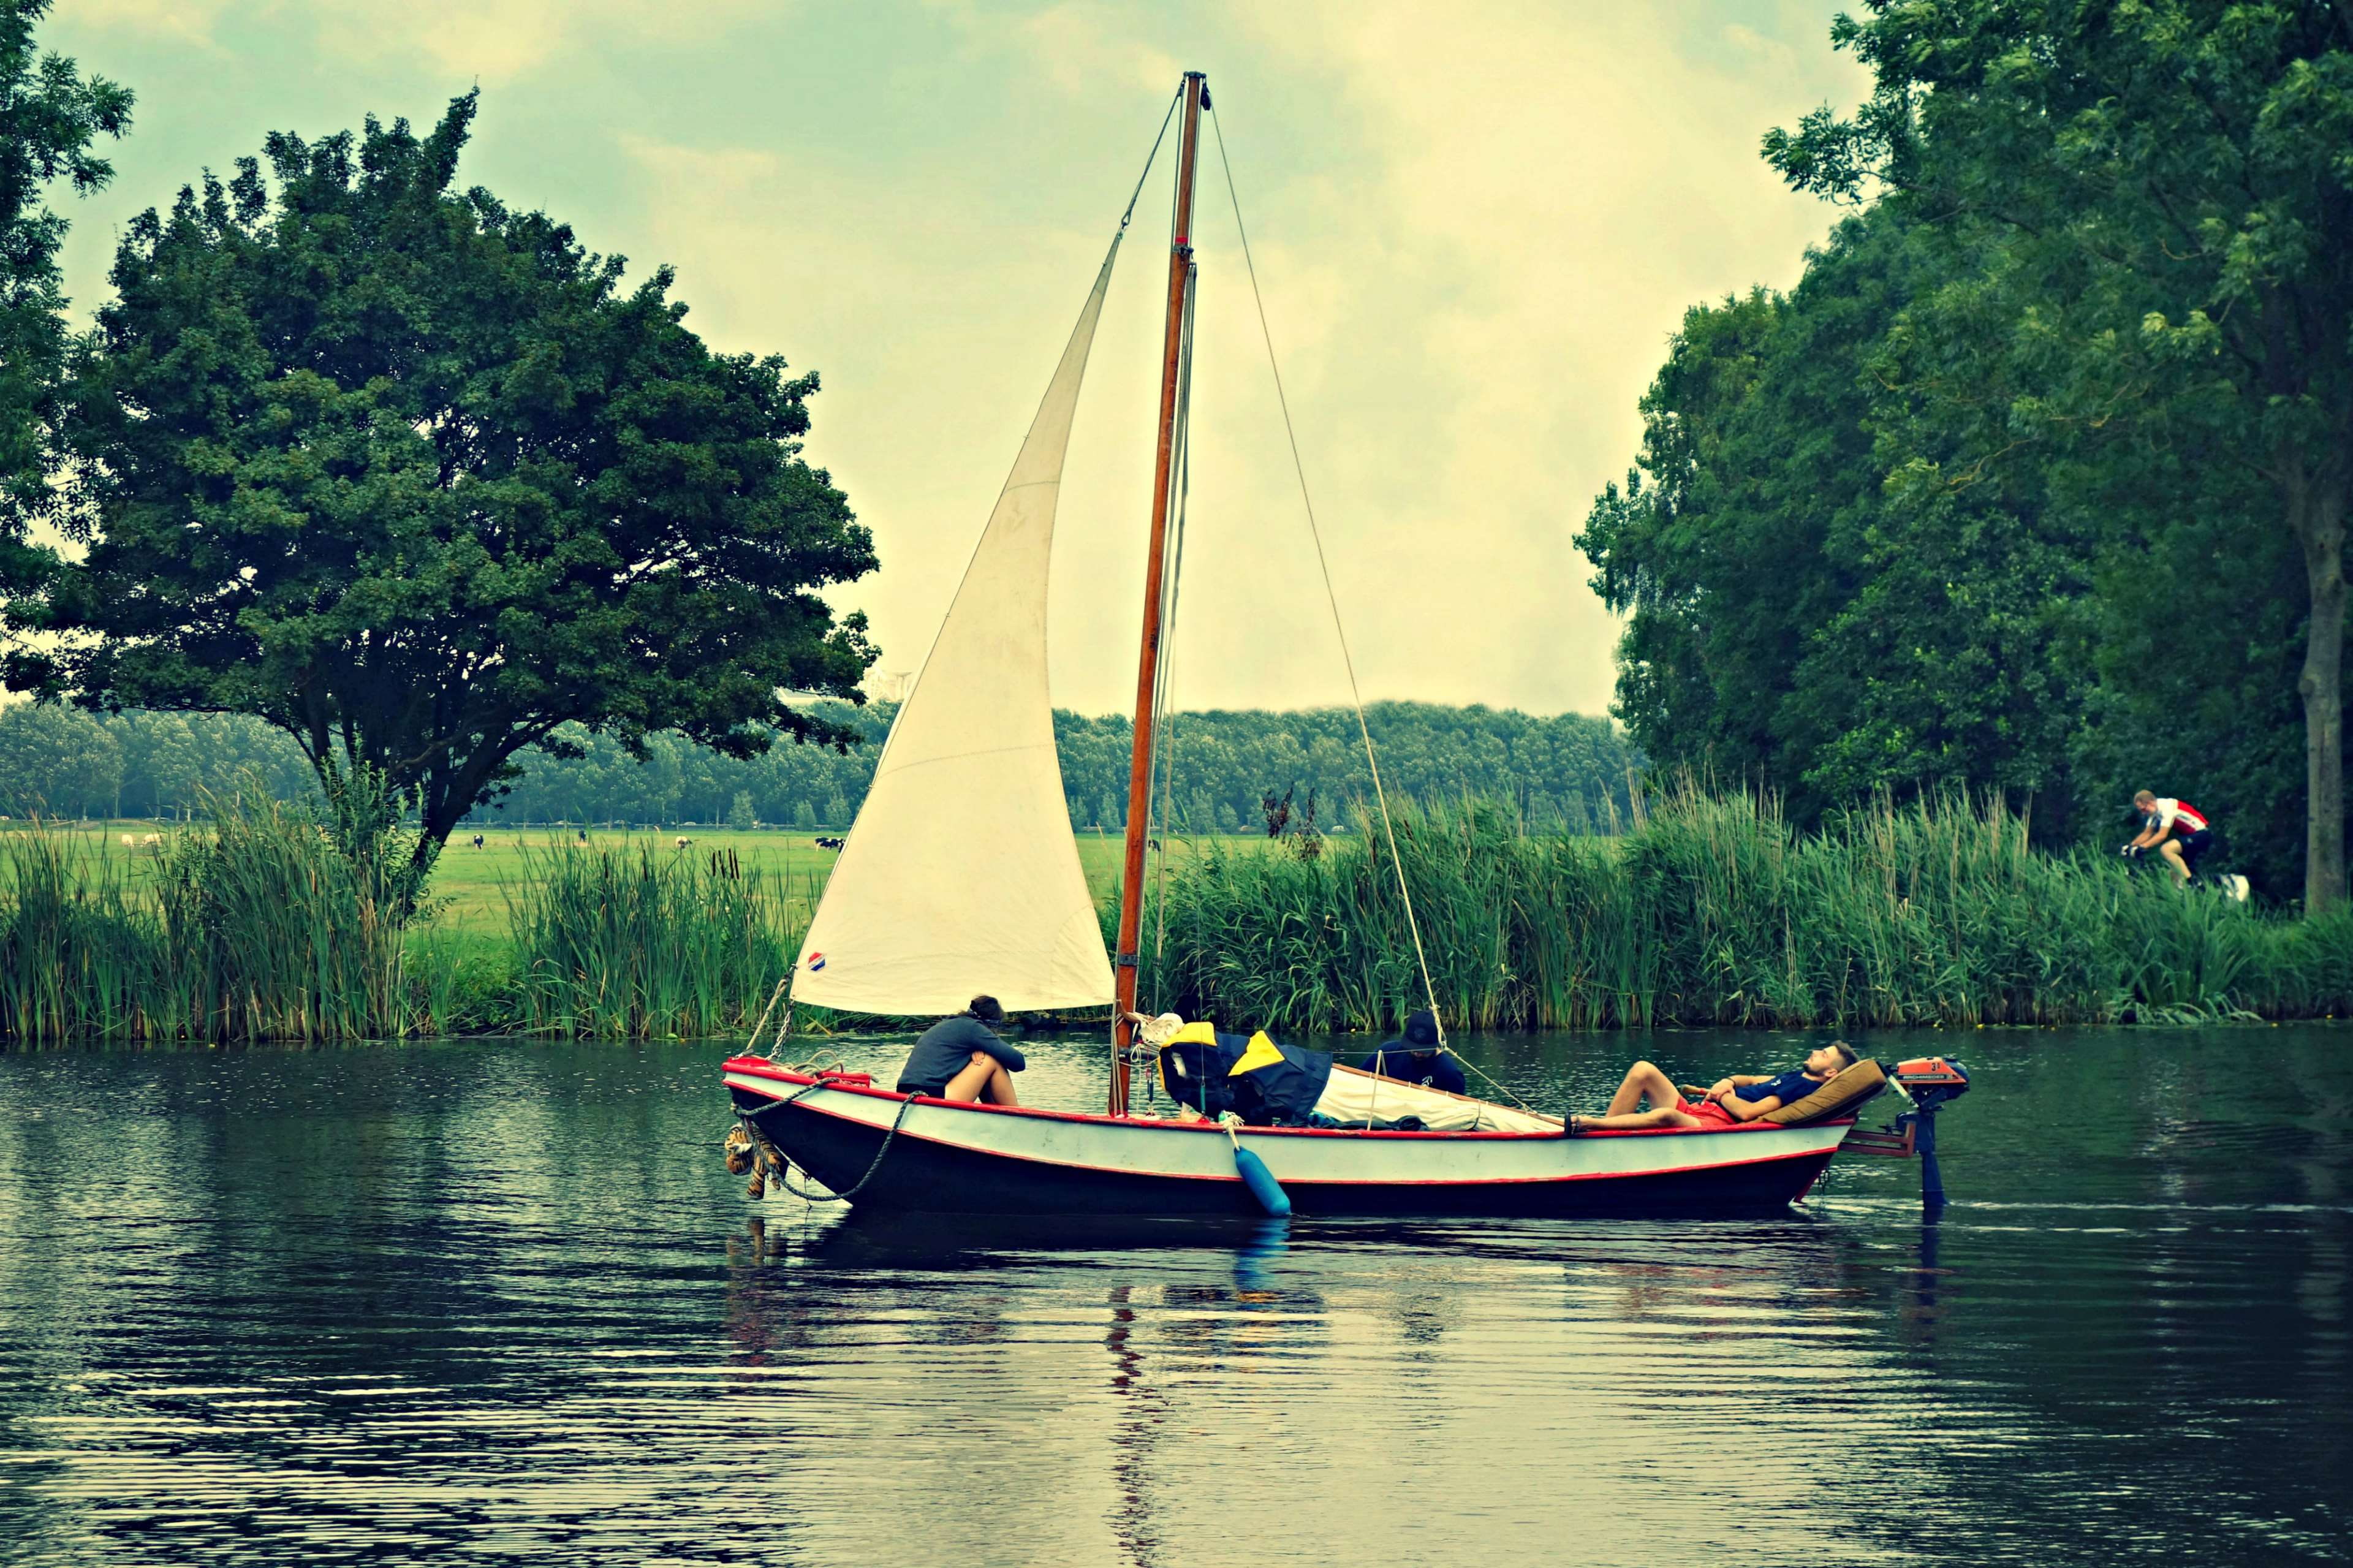 amstel river, amsterdam, boat, holland, leisure, recreation